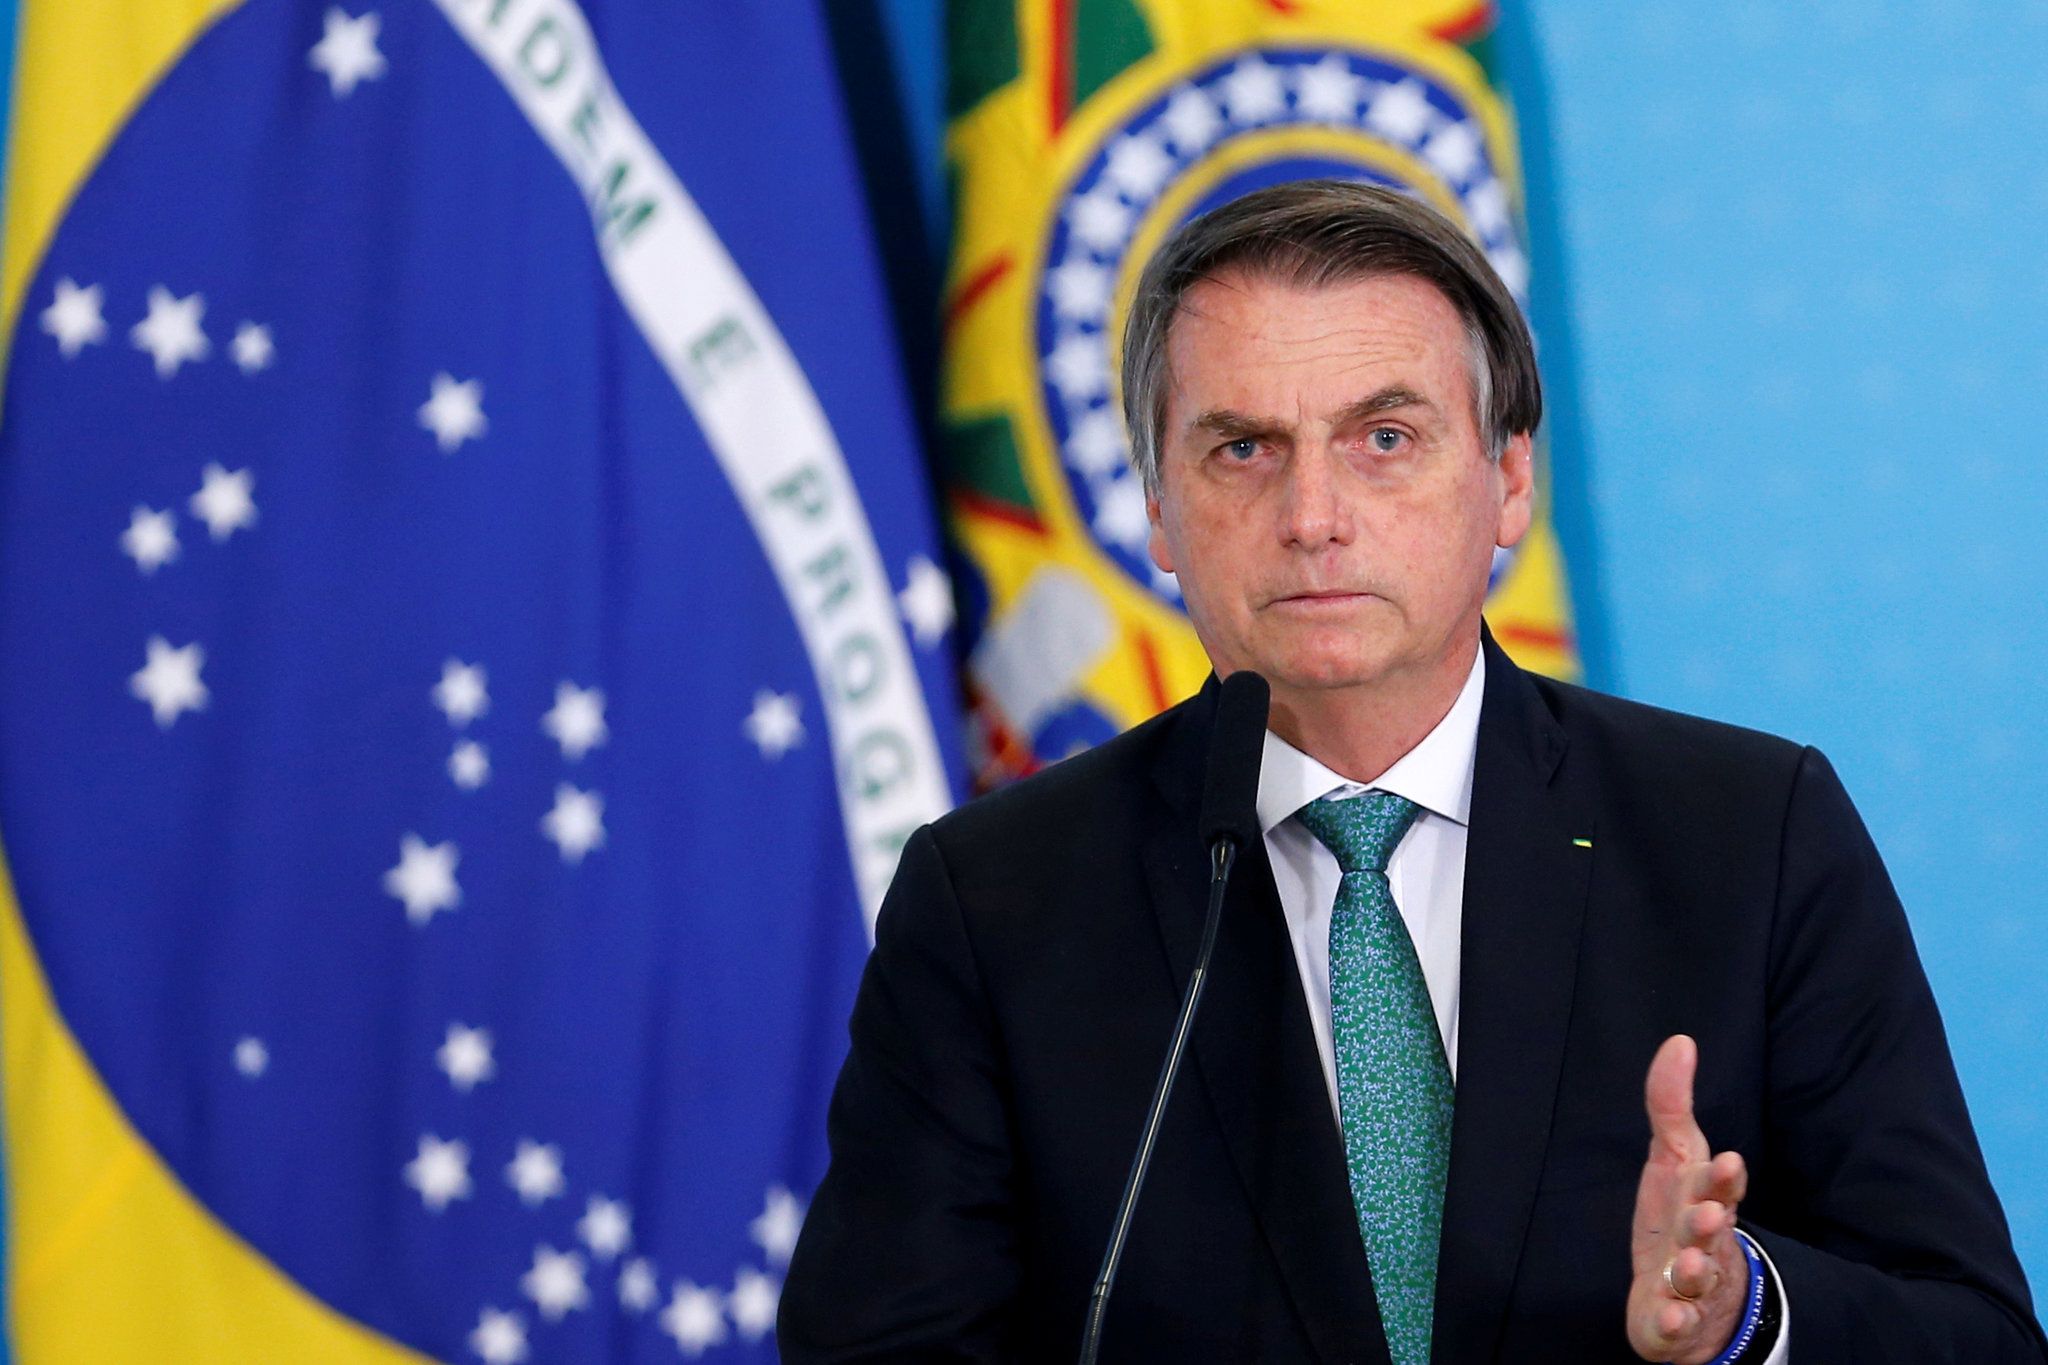 Jair Bolsonaro, Brazil President, Says His Phones Were Hacked